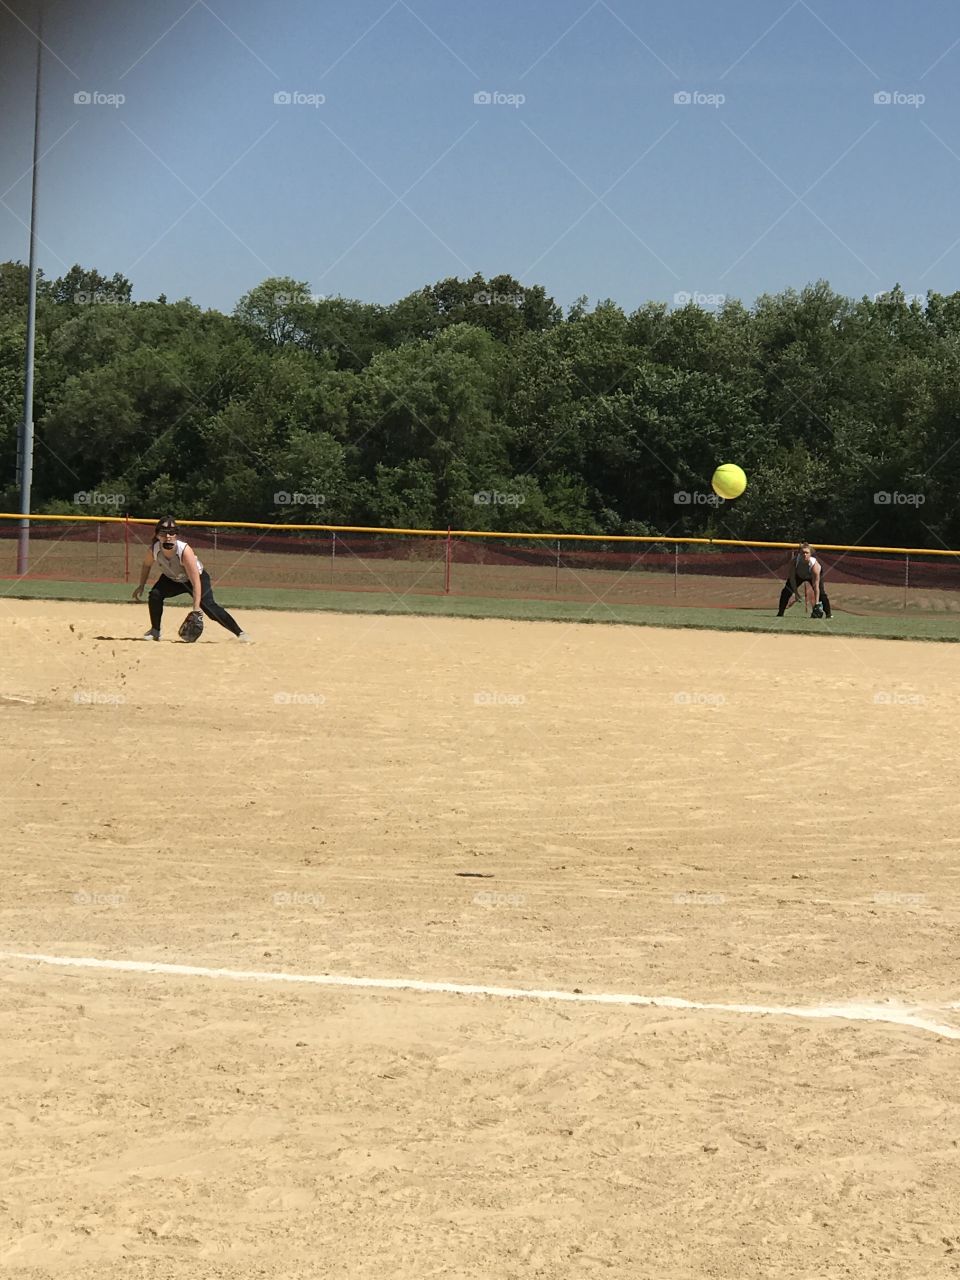 Fielding the softball 